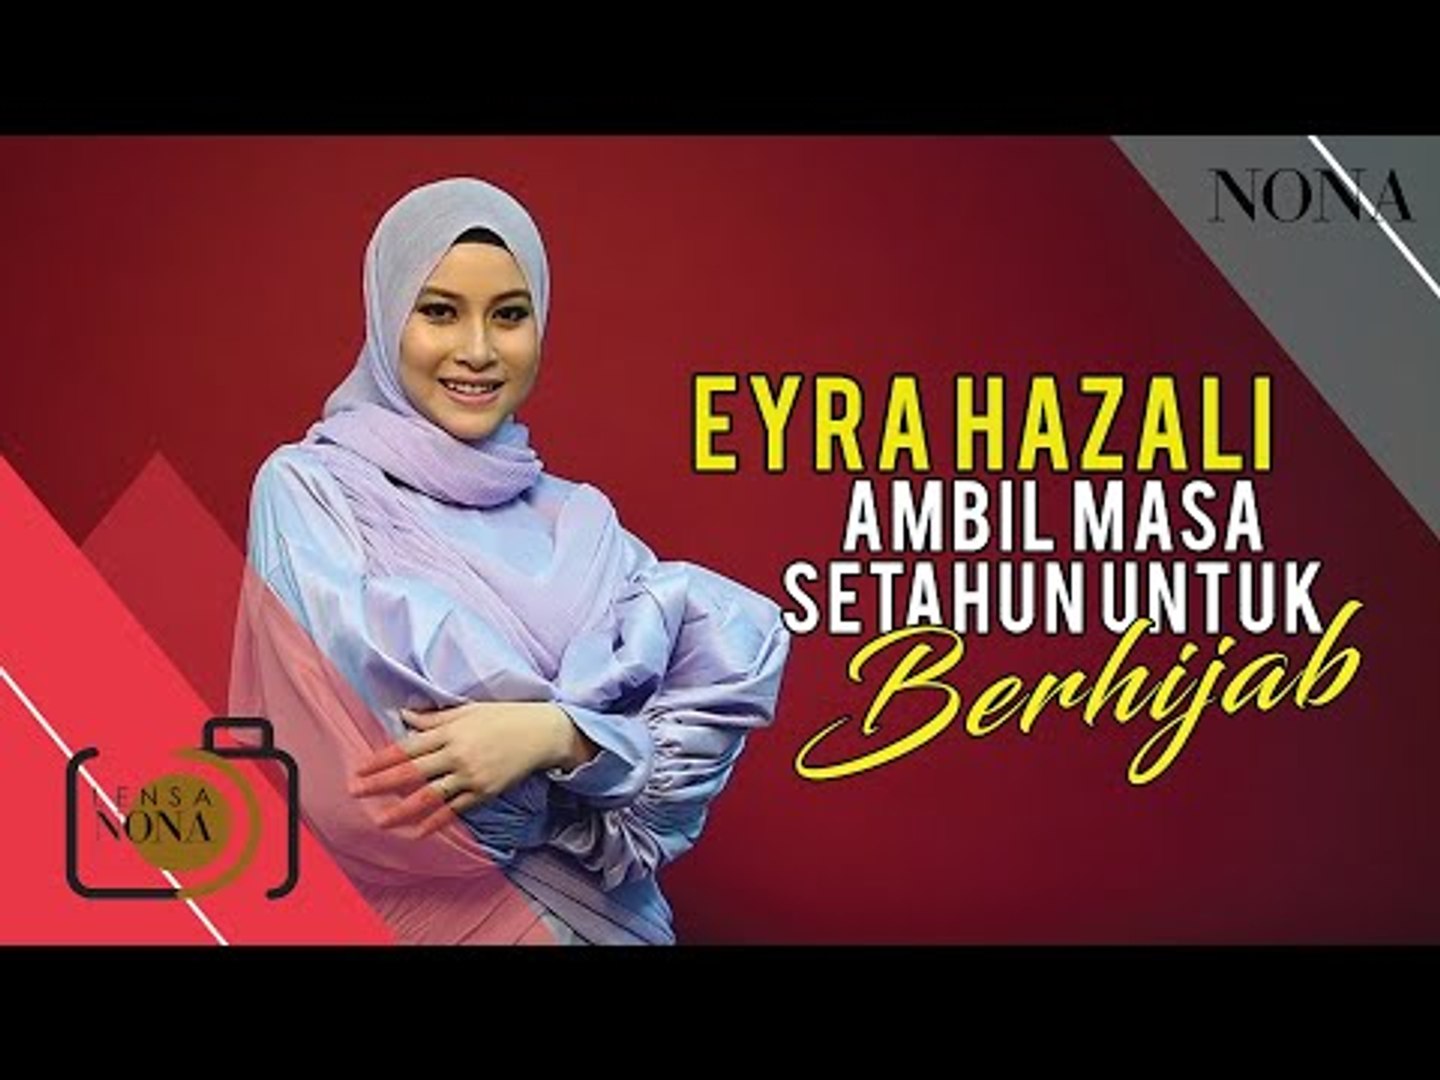 Hazali eyra Eyra Hazali: